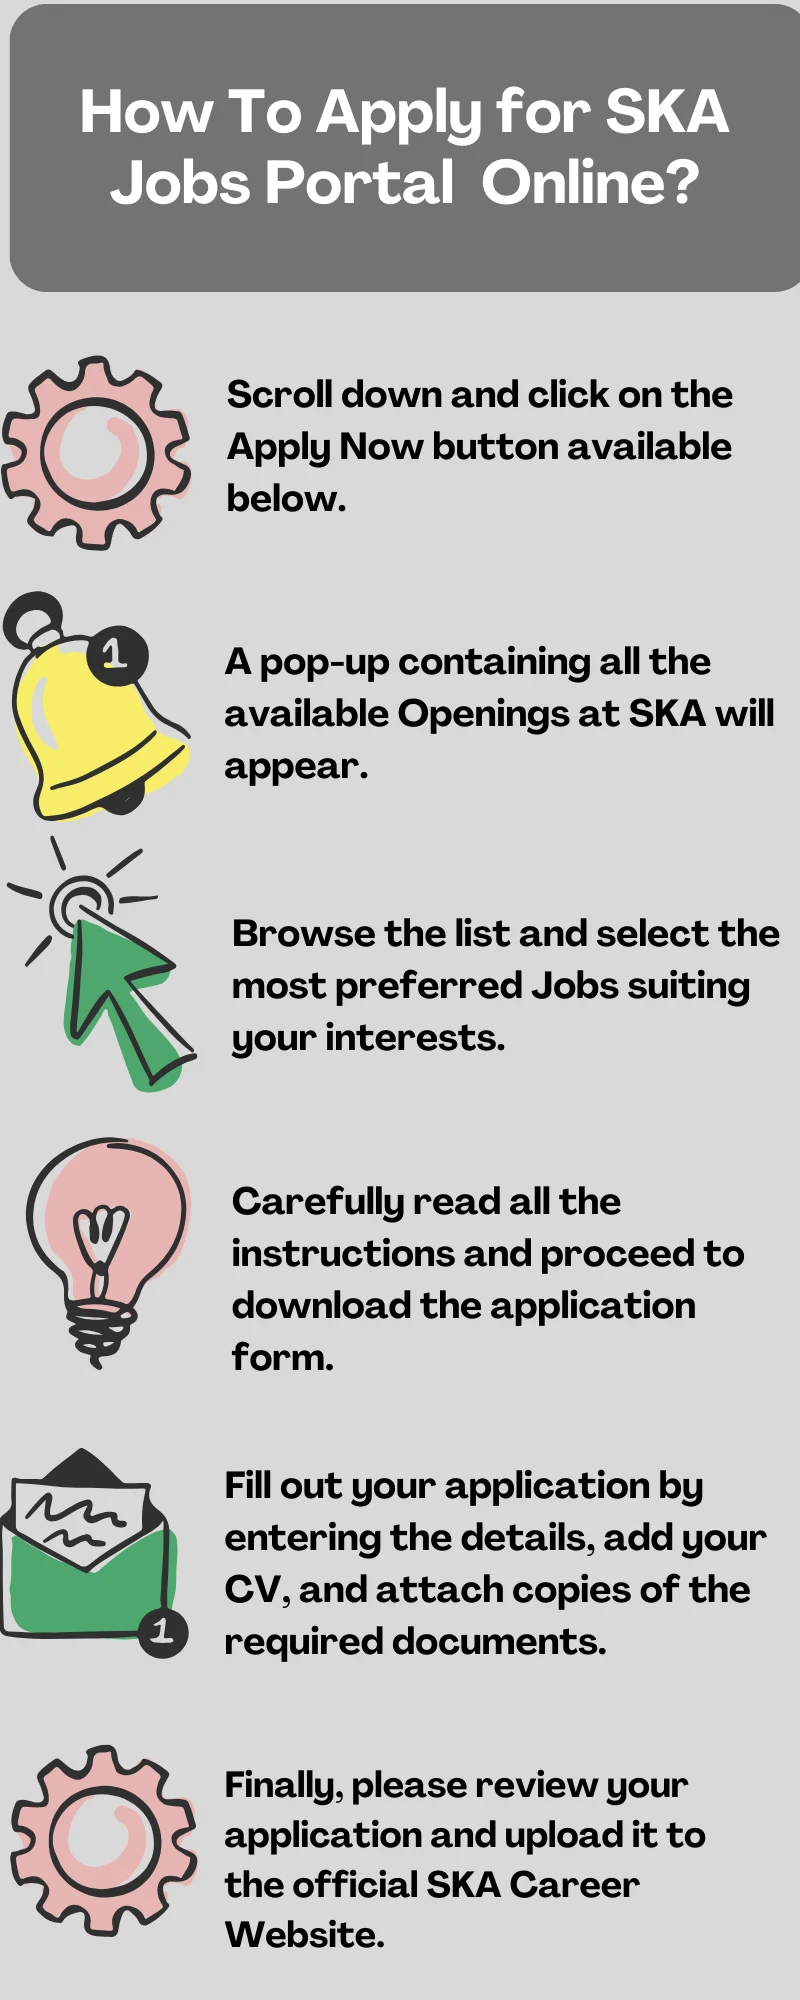 How To Apply for SKA Jobs Portal Online?